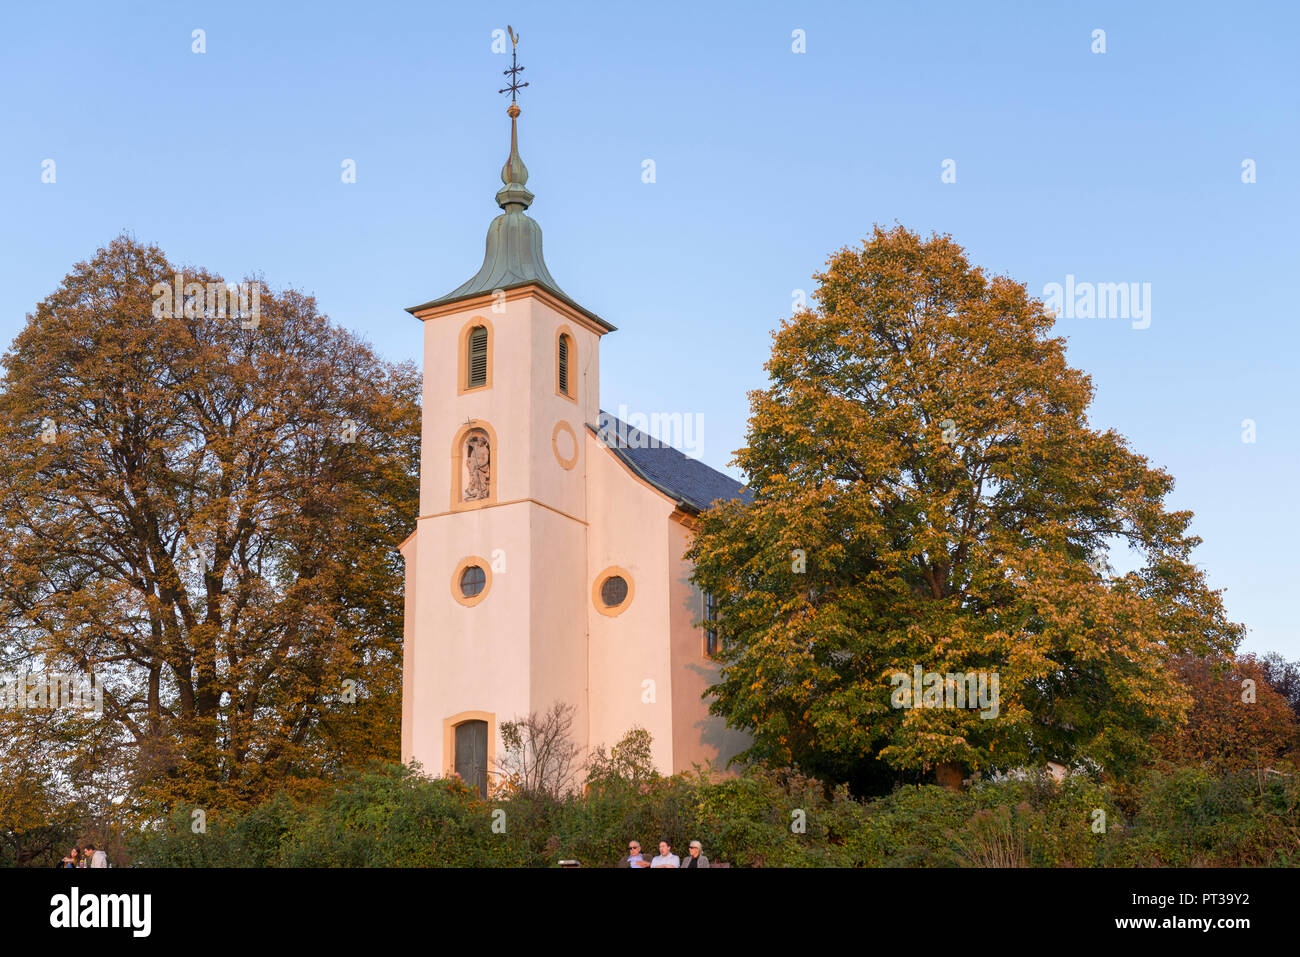 Germany, Baden-Württemberg, Kraichgau, Bruchsal-Untergrombach, Saint Michael's Chapel, baroque pilgrimage church on Michaelsberg Hill, western edge of hilly Kraichgau Region, Stock Photo